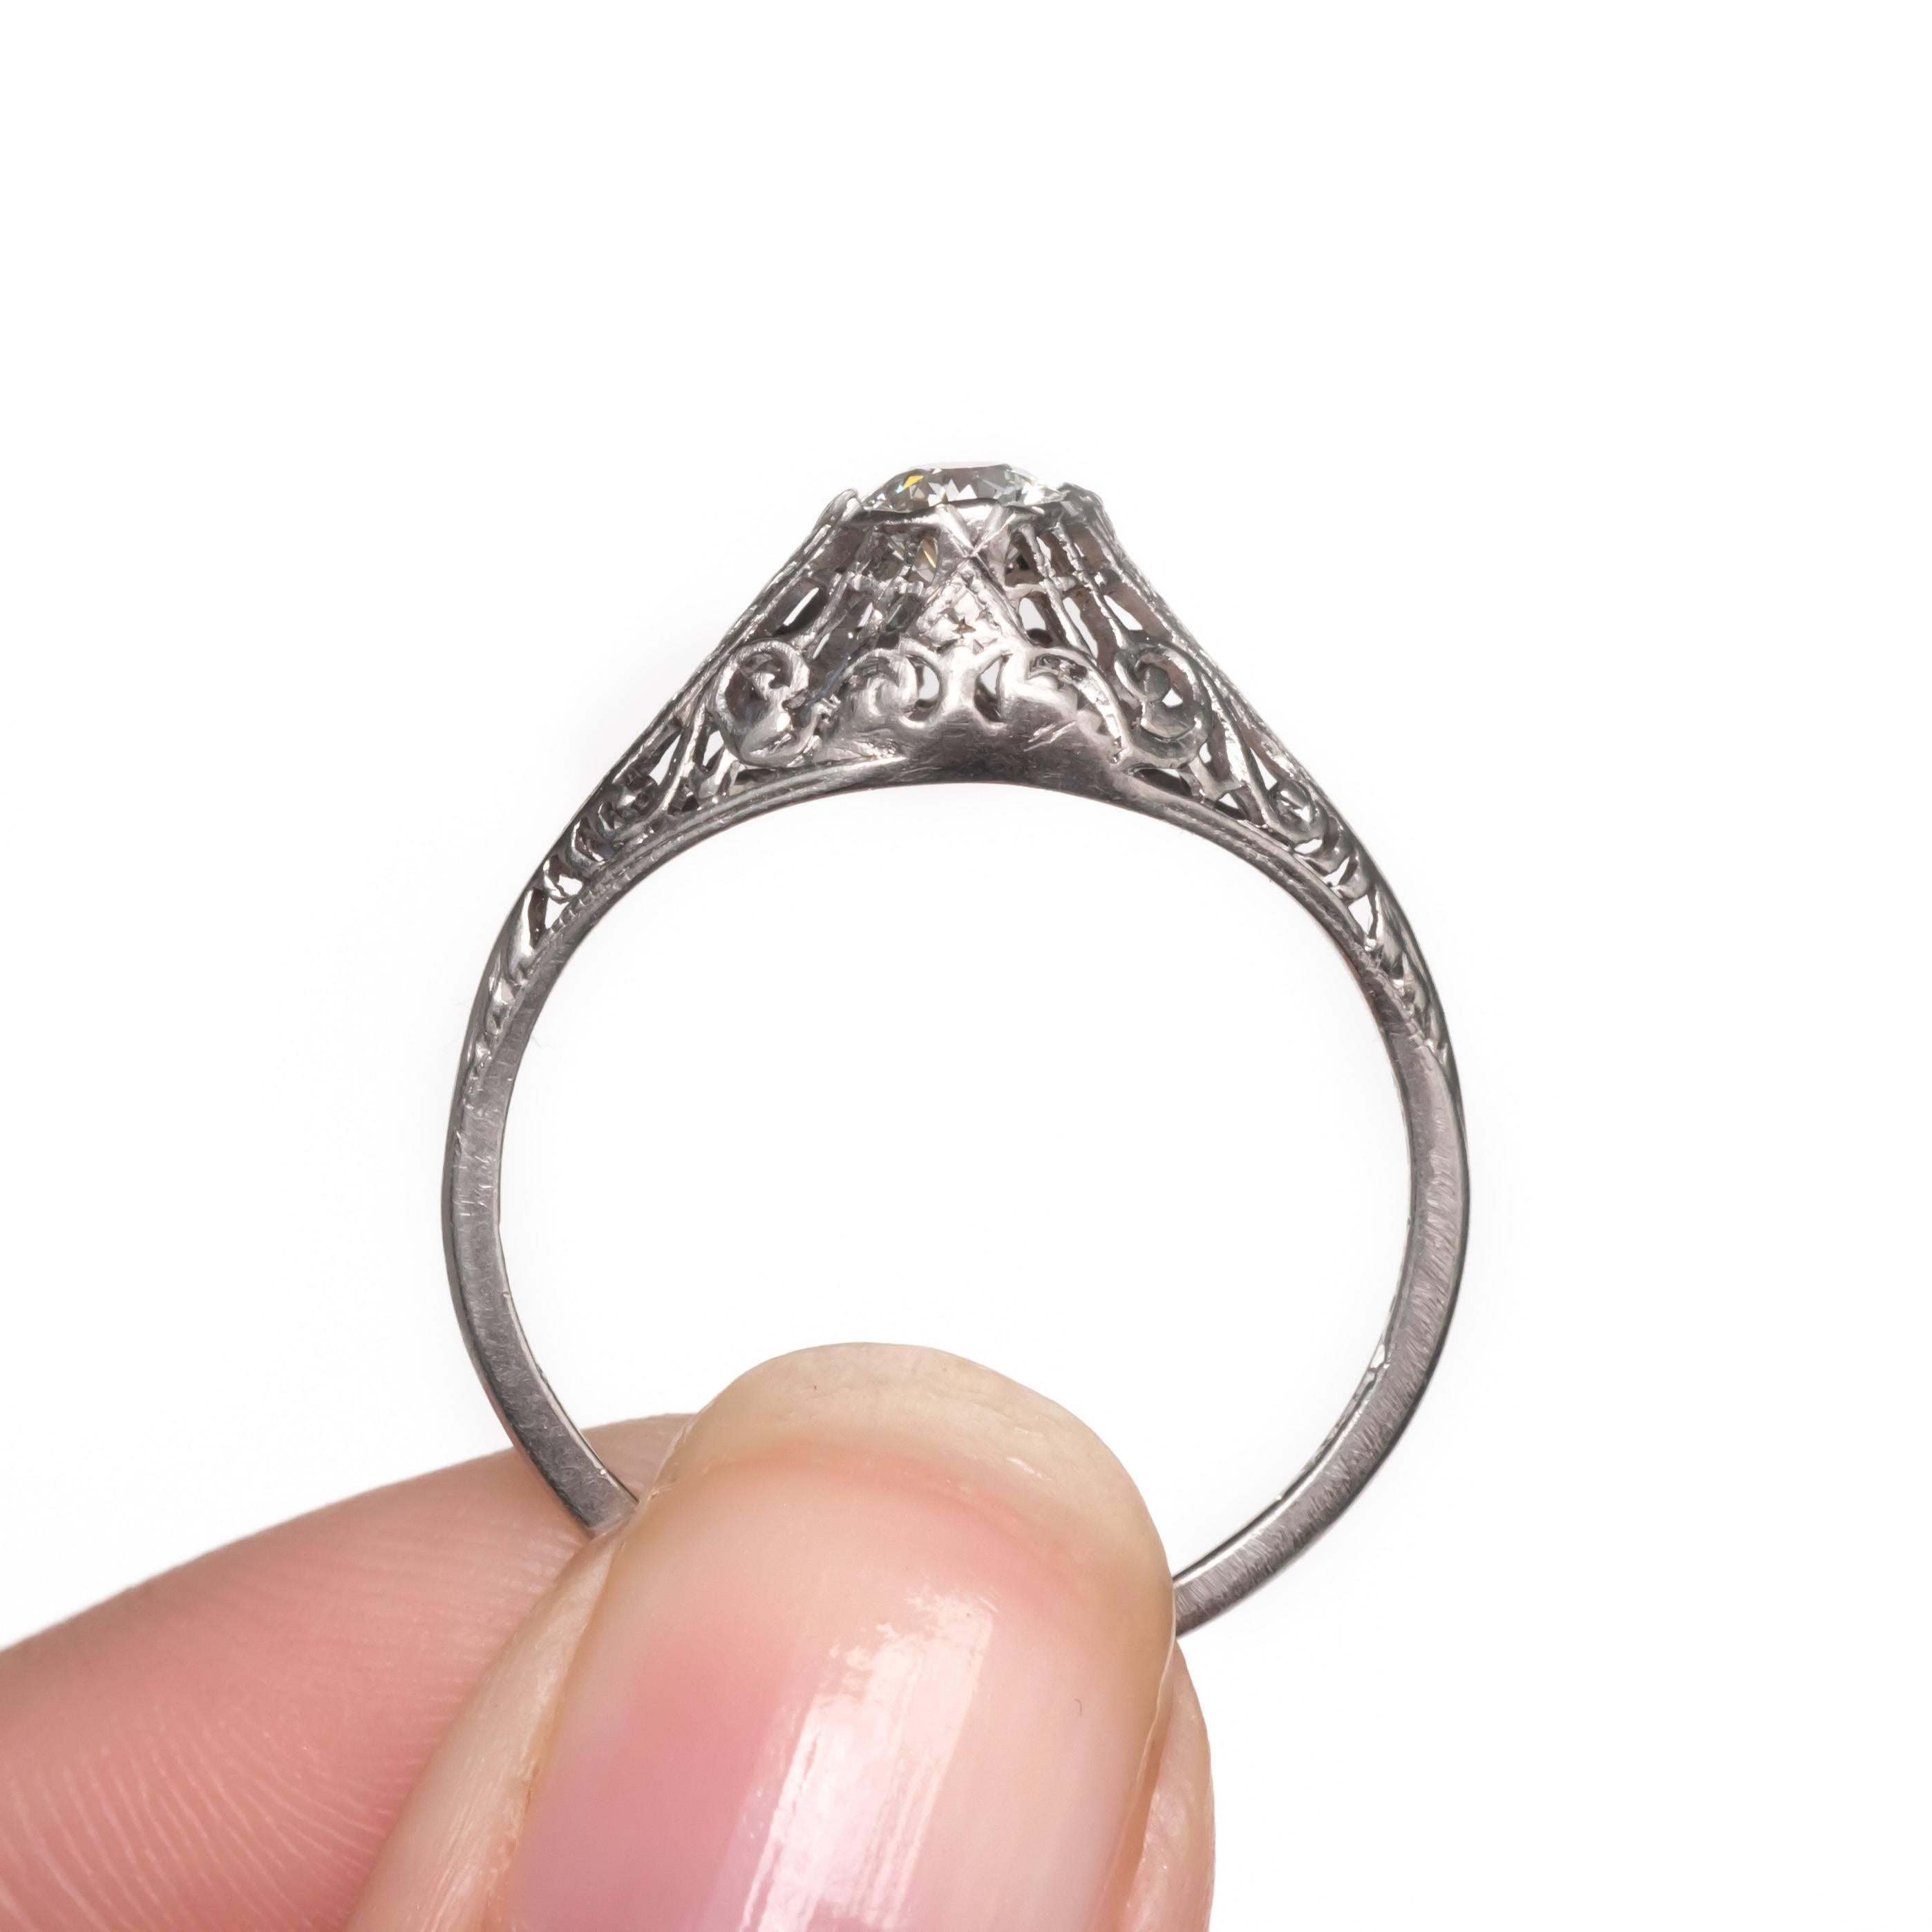 .33 carat diamond engagement ring